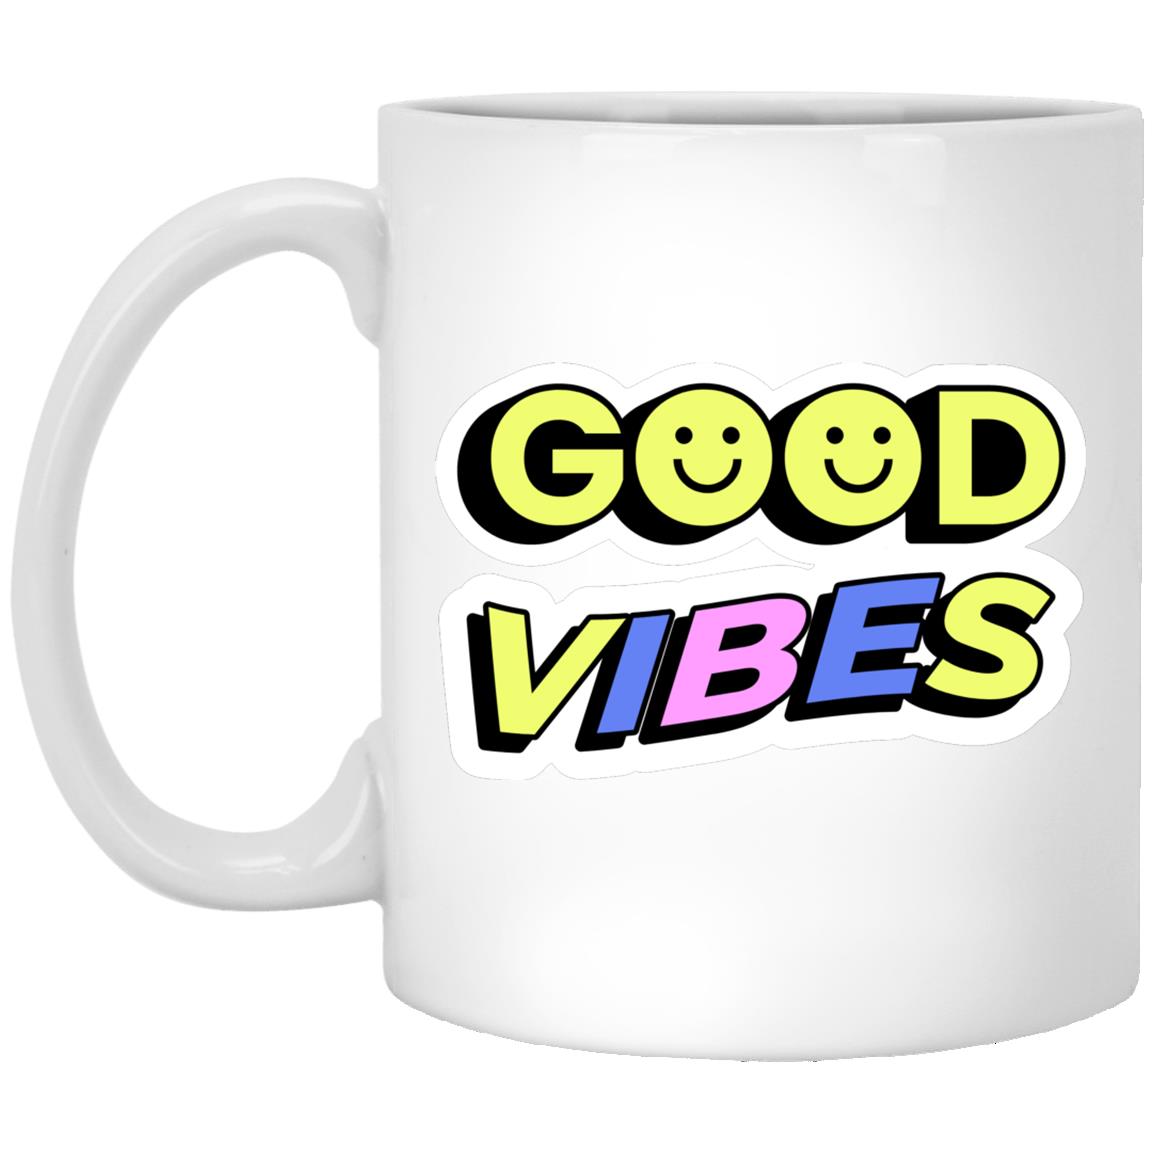 Good Vibes White Mug